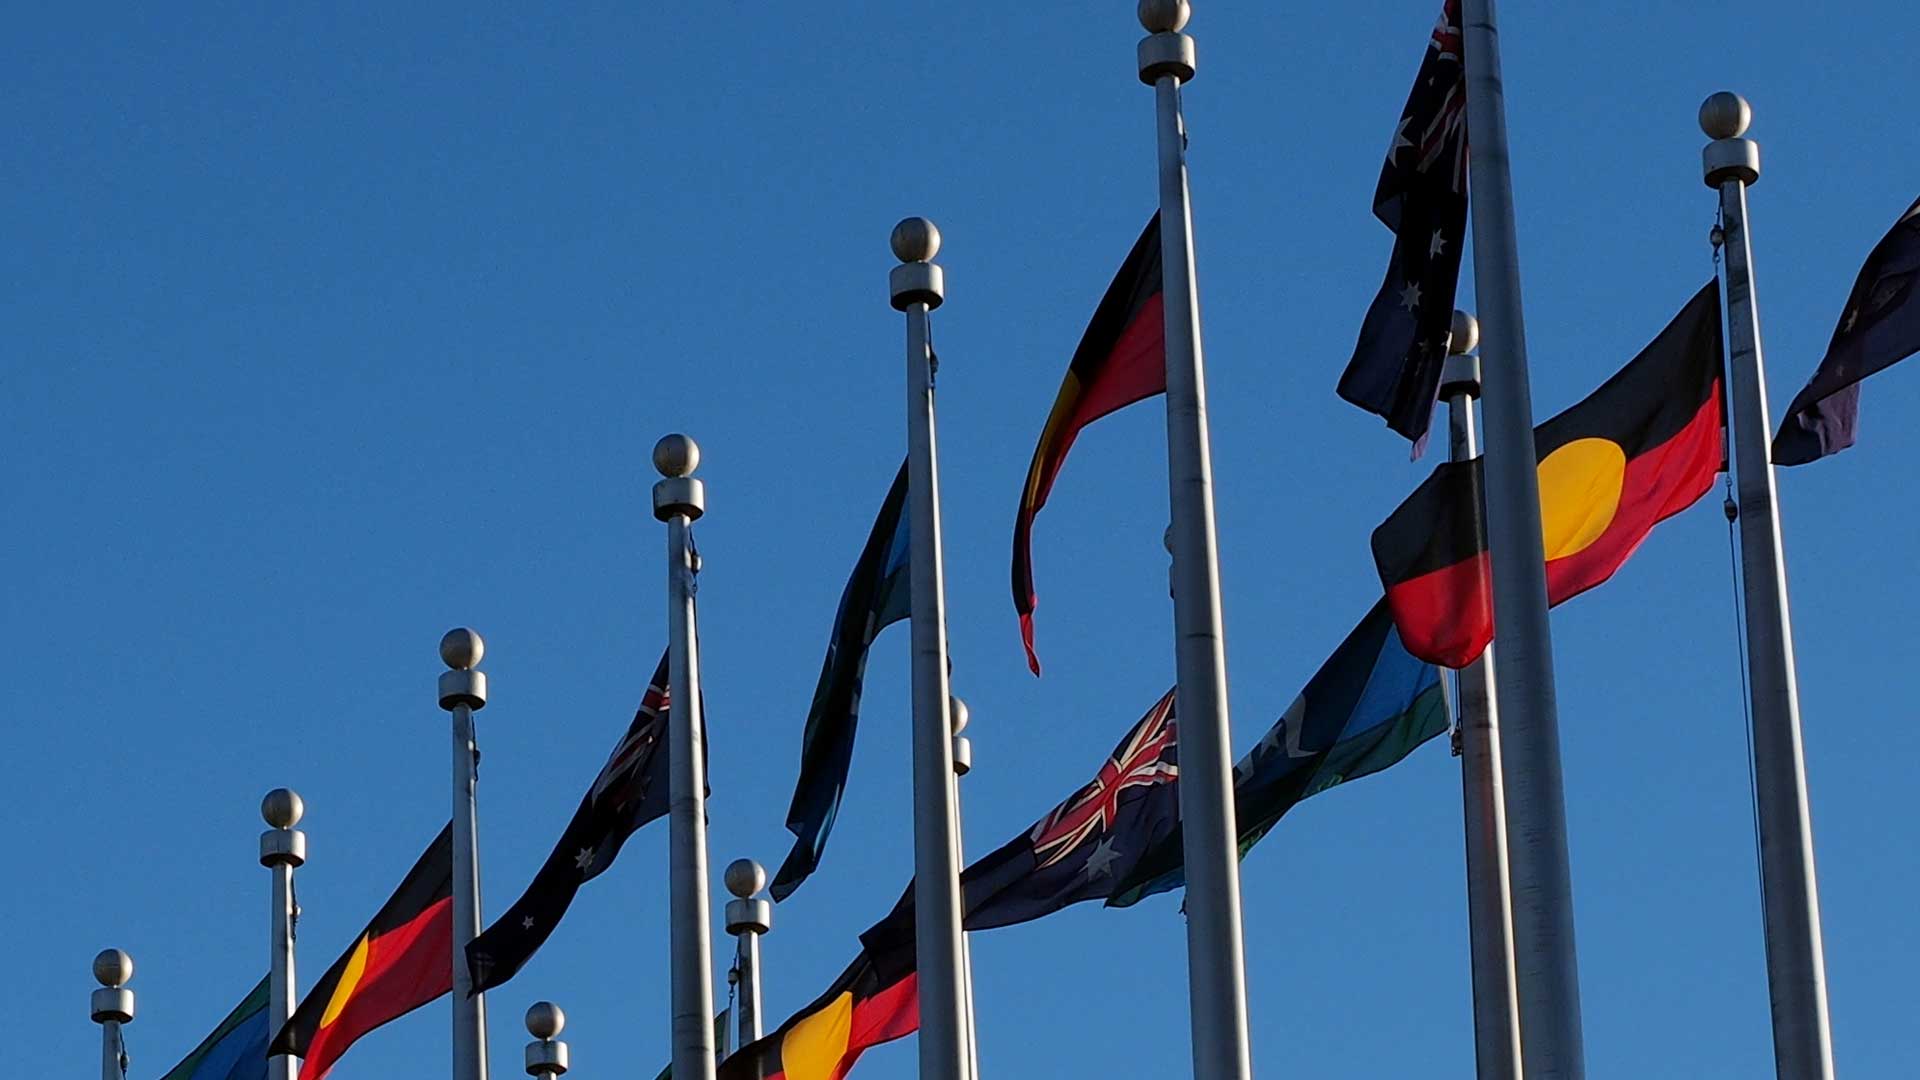 Aboriginal and Australian flags flying across a blue sky